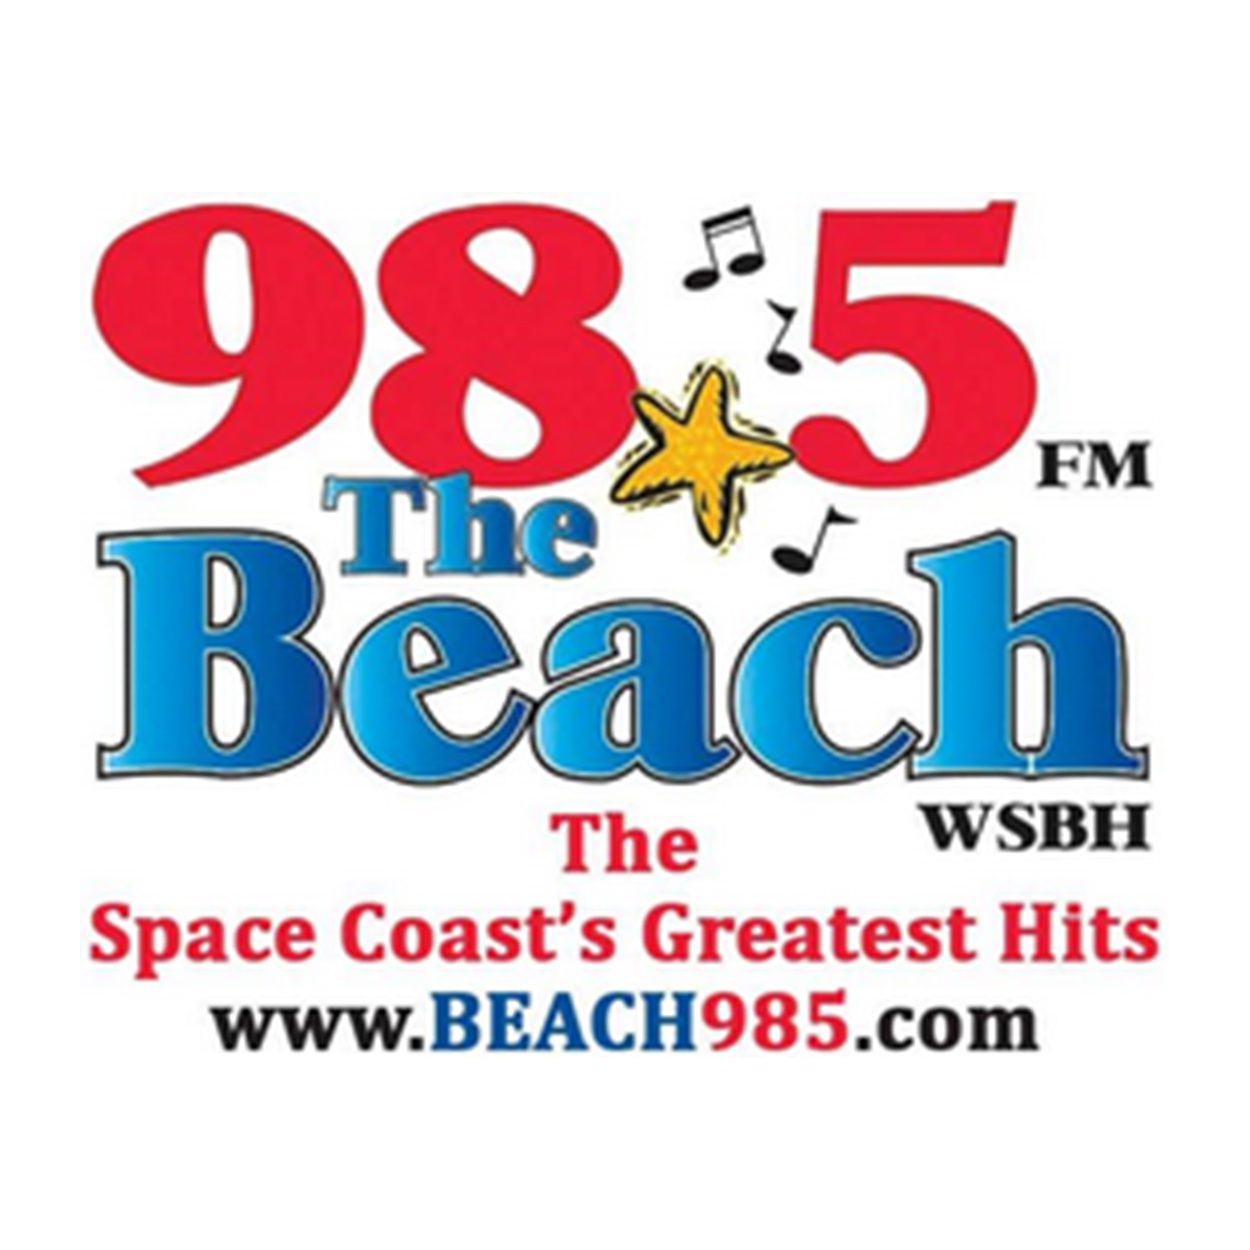 The Beach radio logo